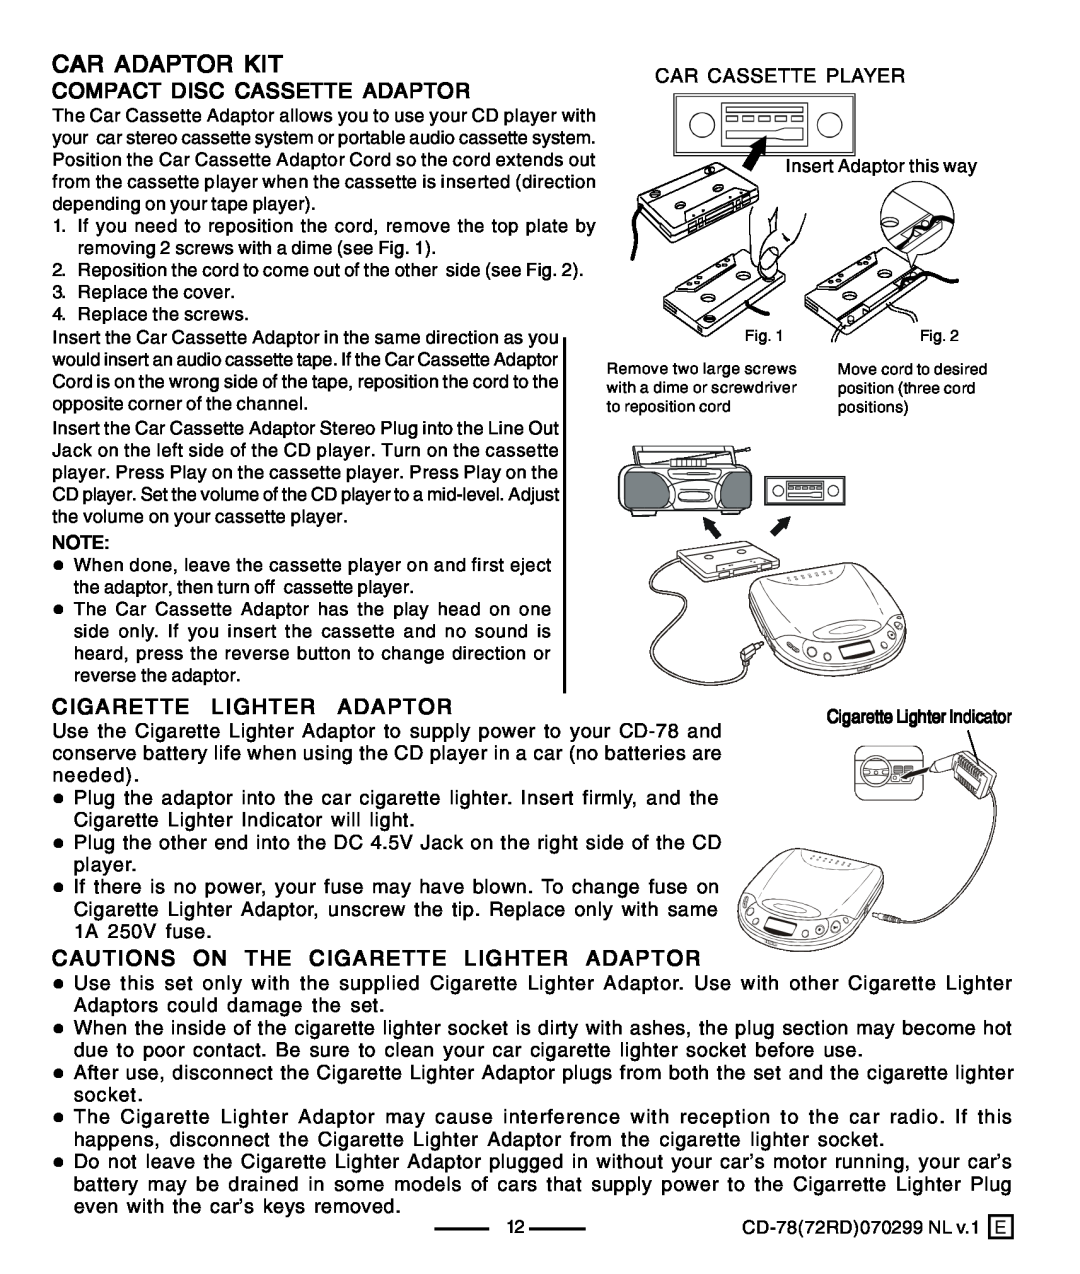 Lenoxx Electronics CD-78 operating instructions Car Adaptor Kit, Compact Disc Cassette Adaptor, Cigarette Lighter Adaptor 